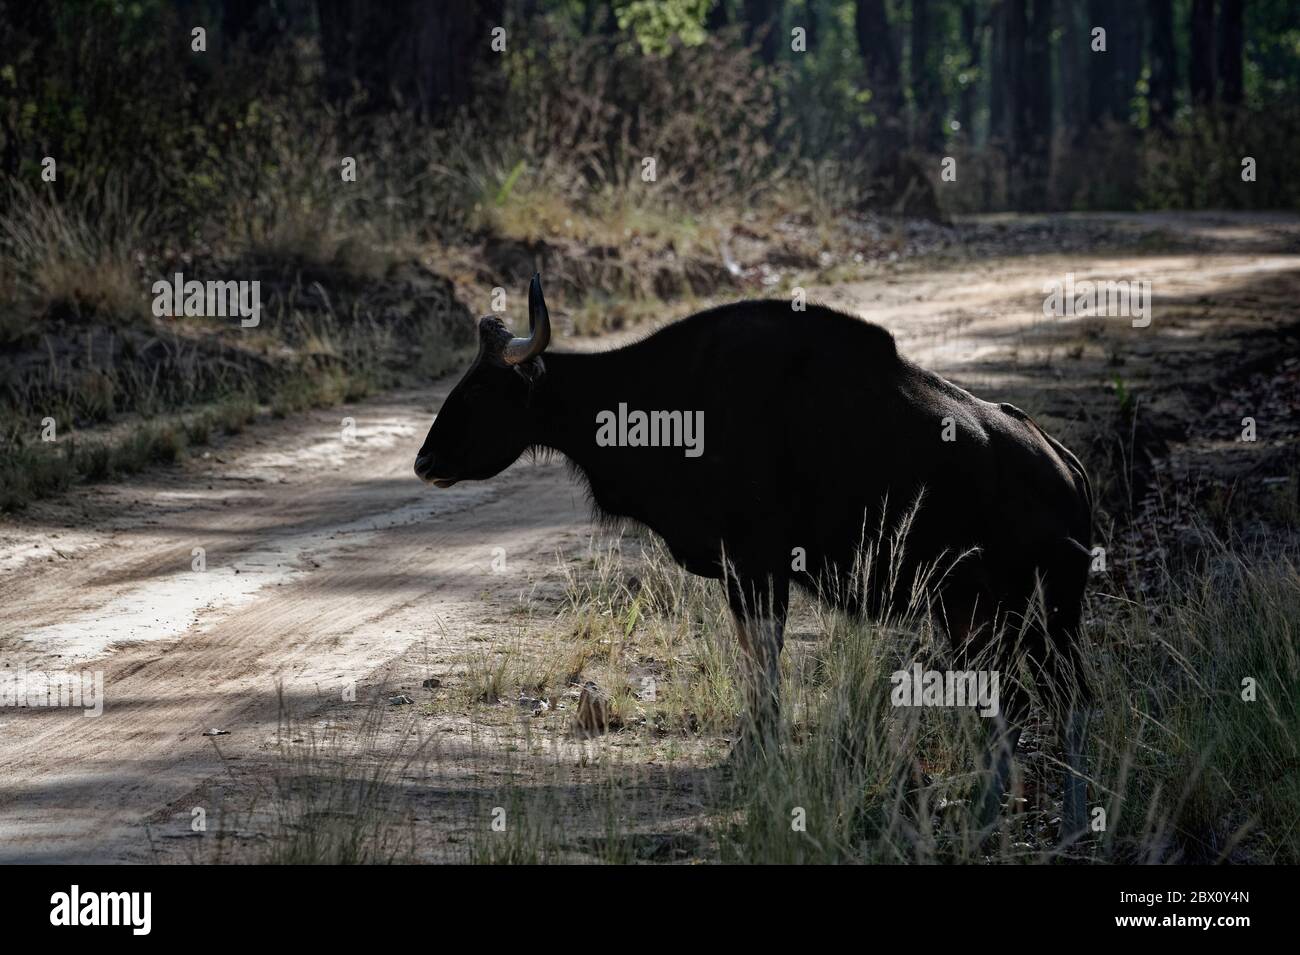 Gaur (Bos gaurus) o bisonte indiano che attraversa una strada, Kanha National Park, Madhya Pradesh, India Foto Stock